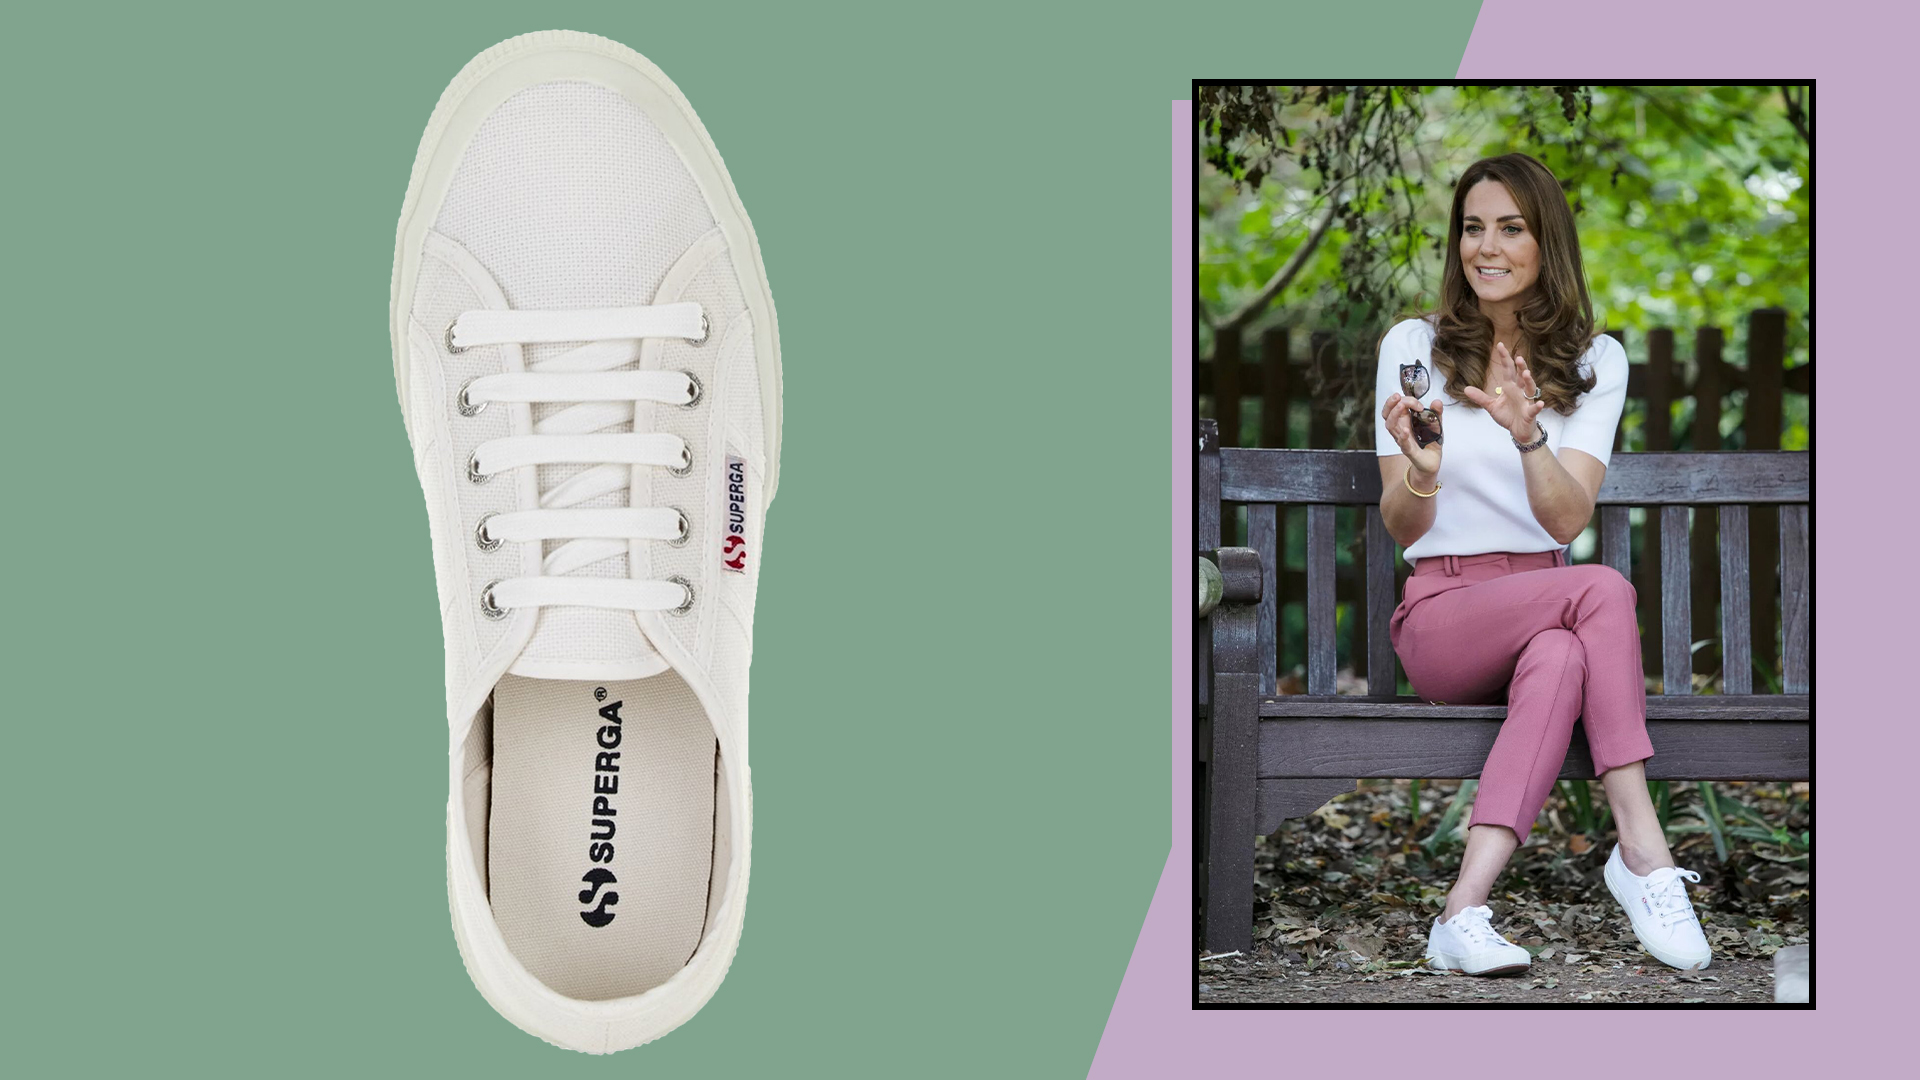 Kate Middleton's Superga Sneakers: White Canvas Cotu Classic 2750